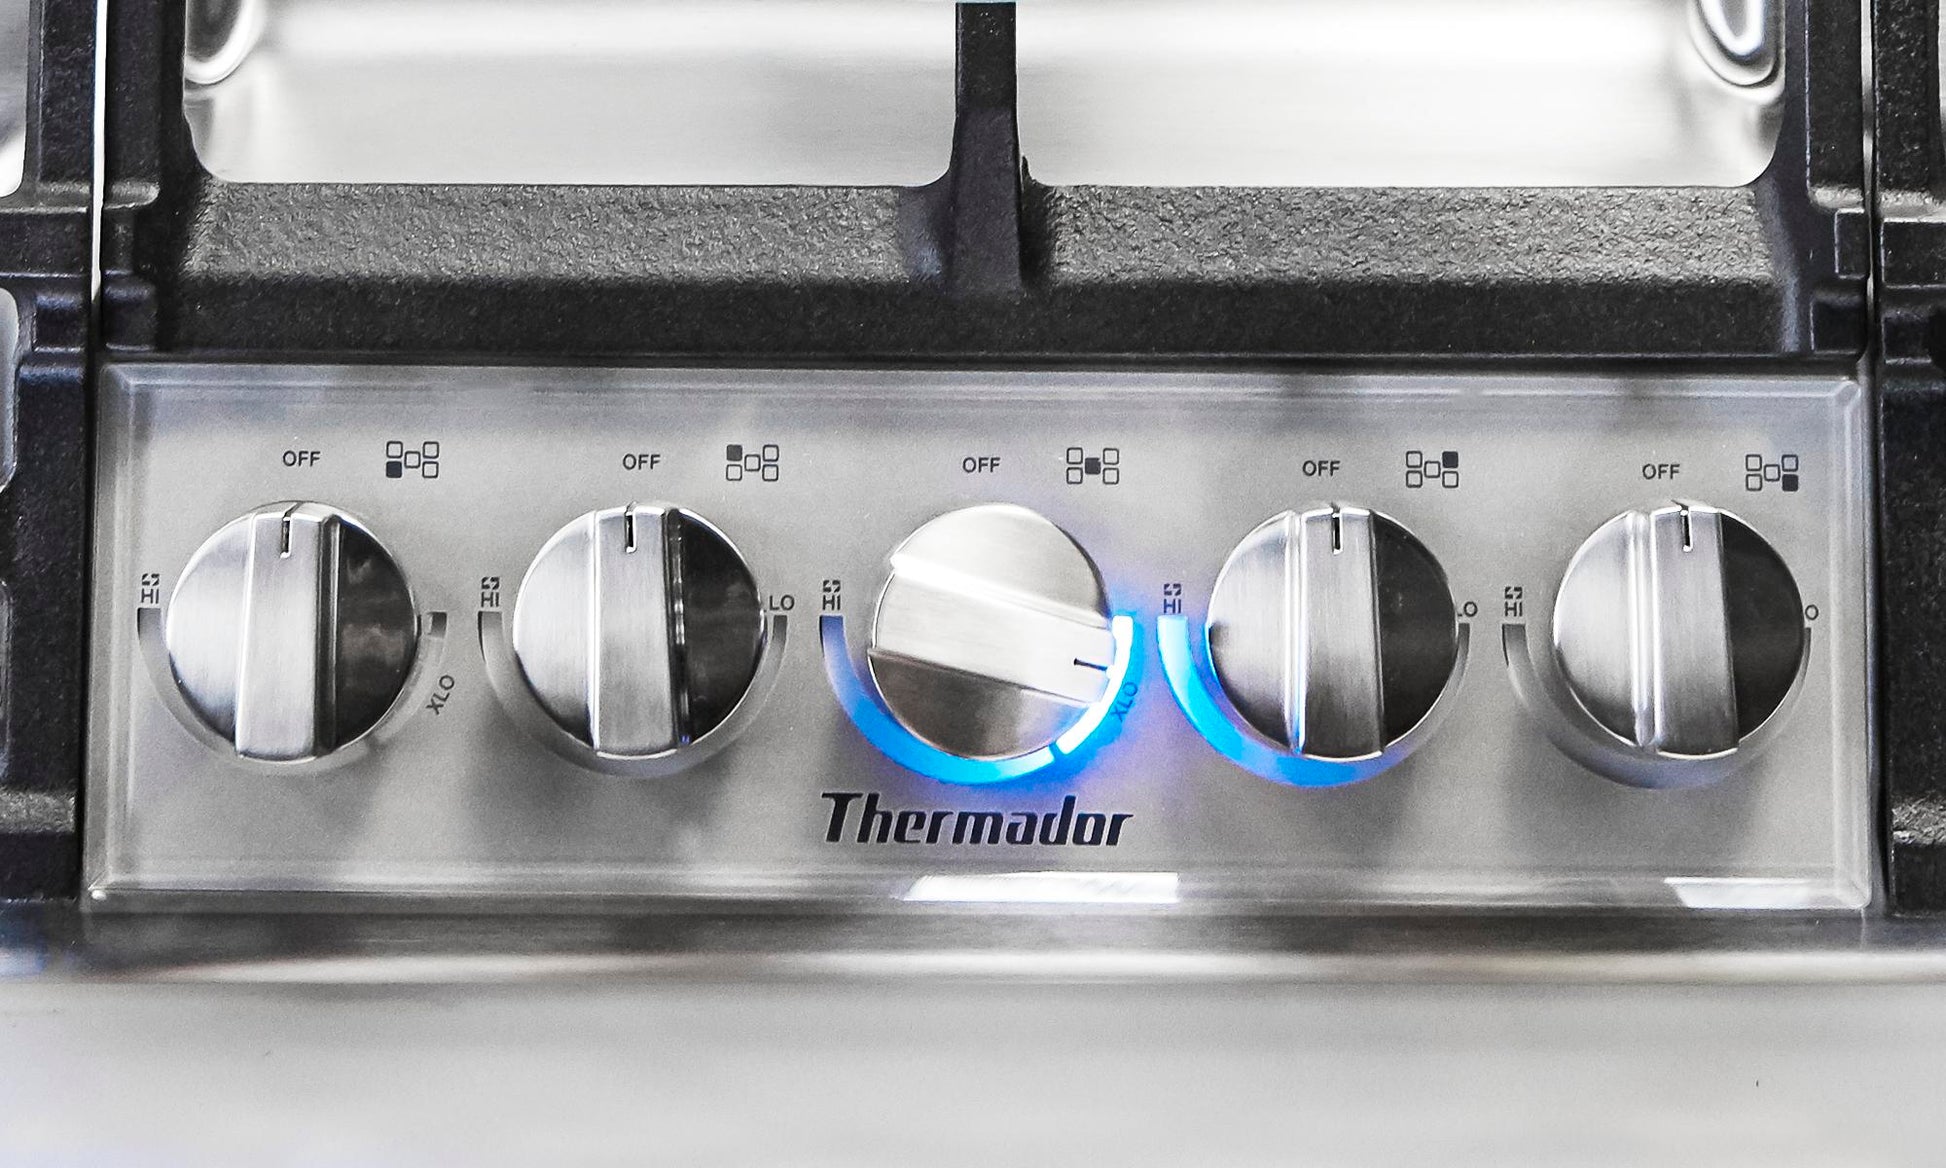 16805551_SGSXP365TS-Thermador-Cooktops-Illuminated-Control-Panel_def